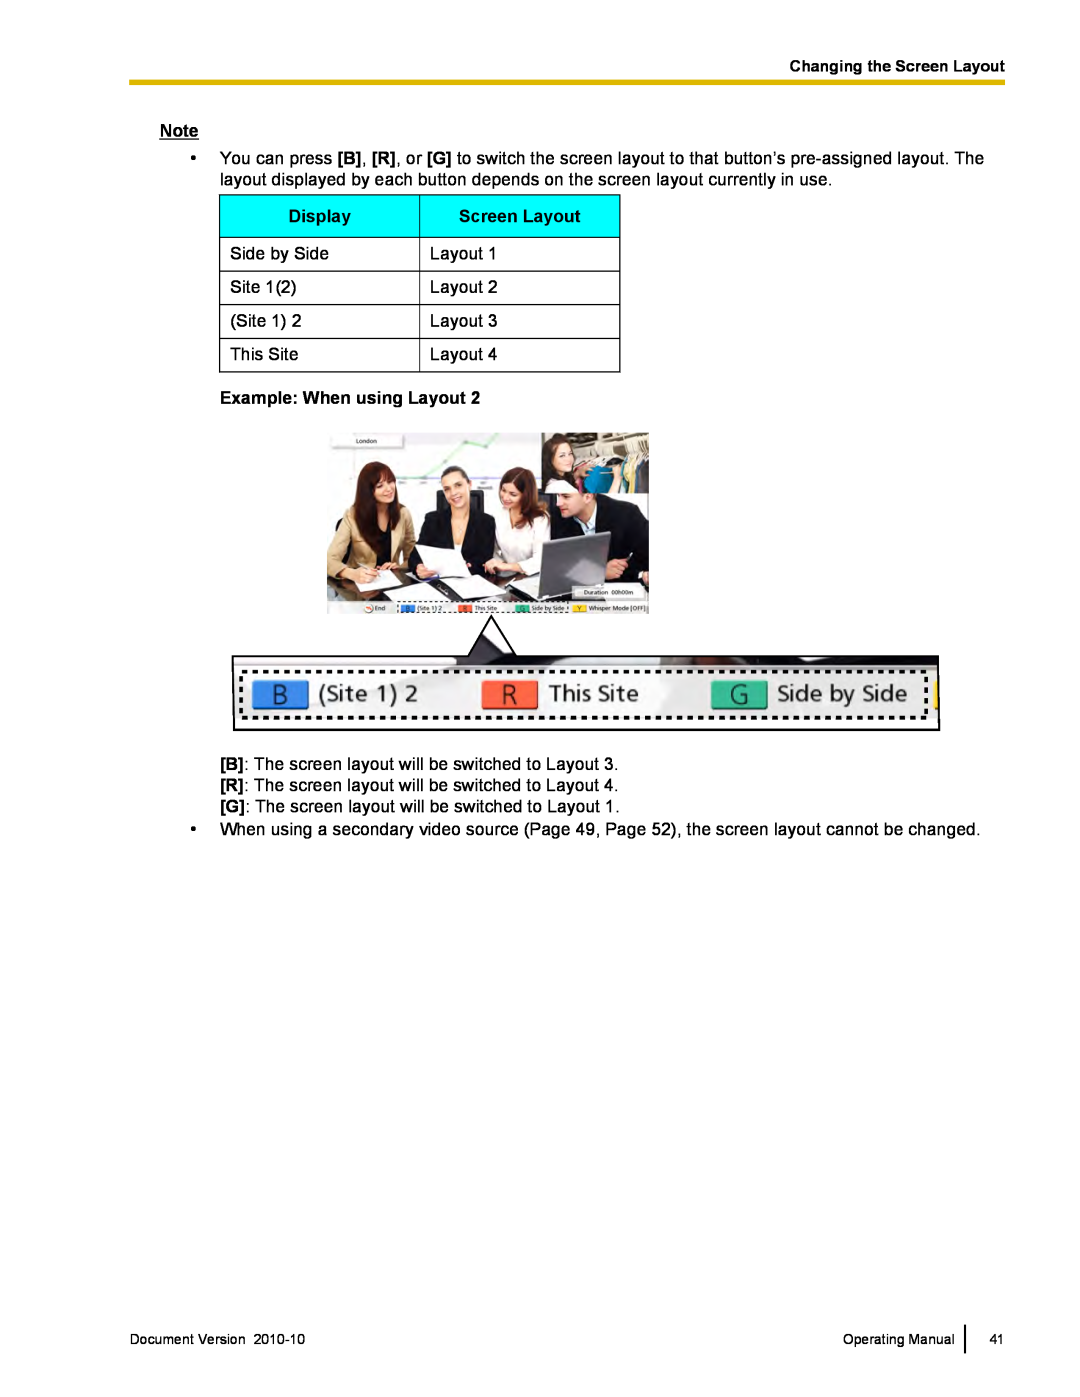 Panasonic KX-VC500 manual Display, Screen Layout, Example: When using Layout 